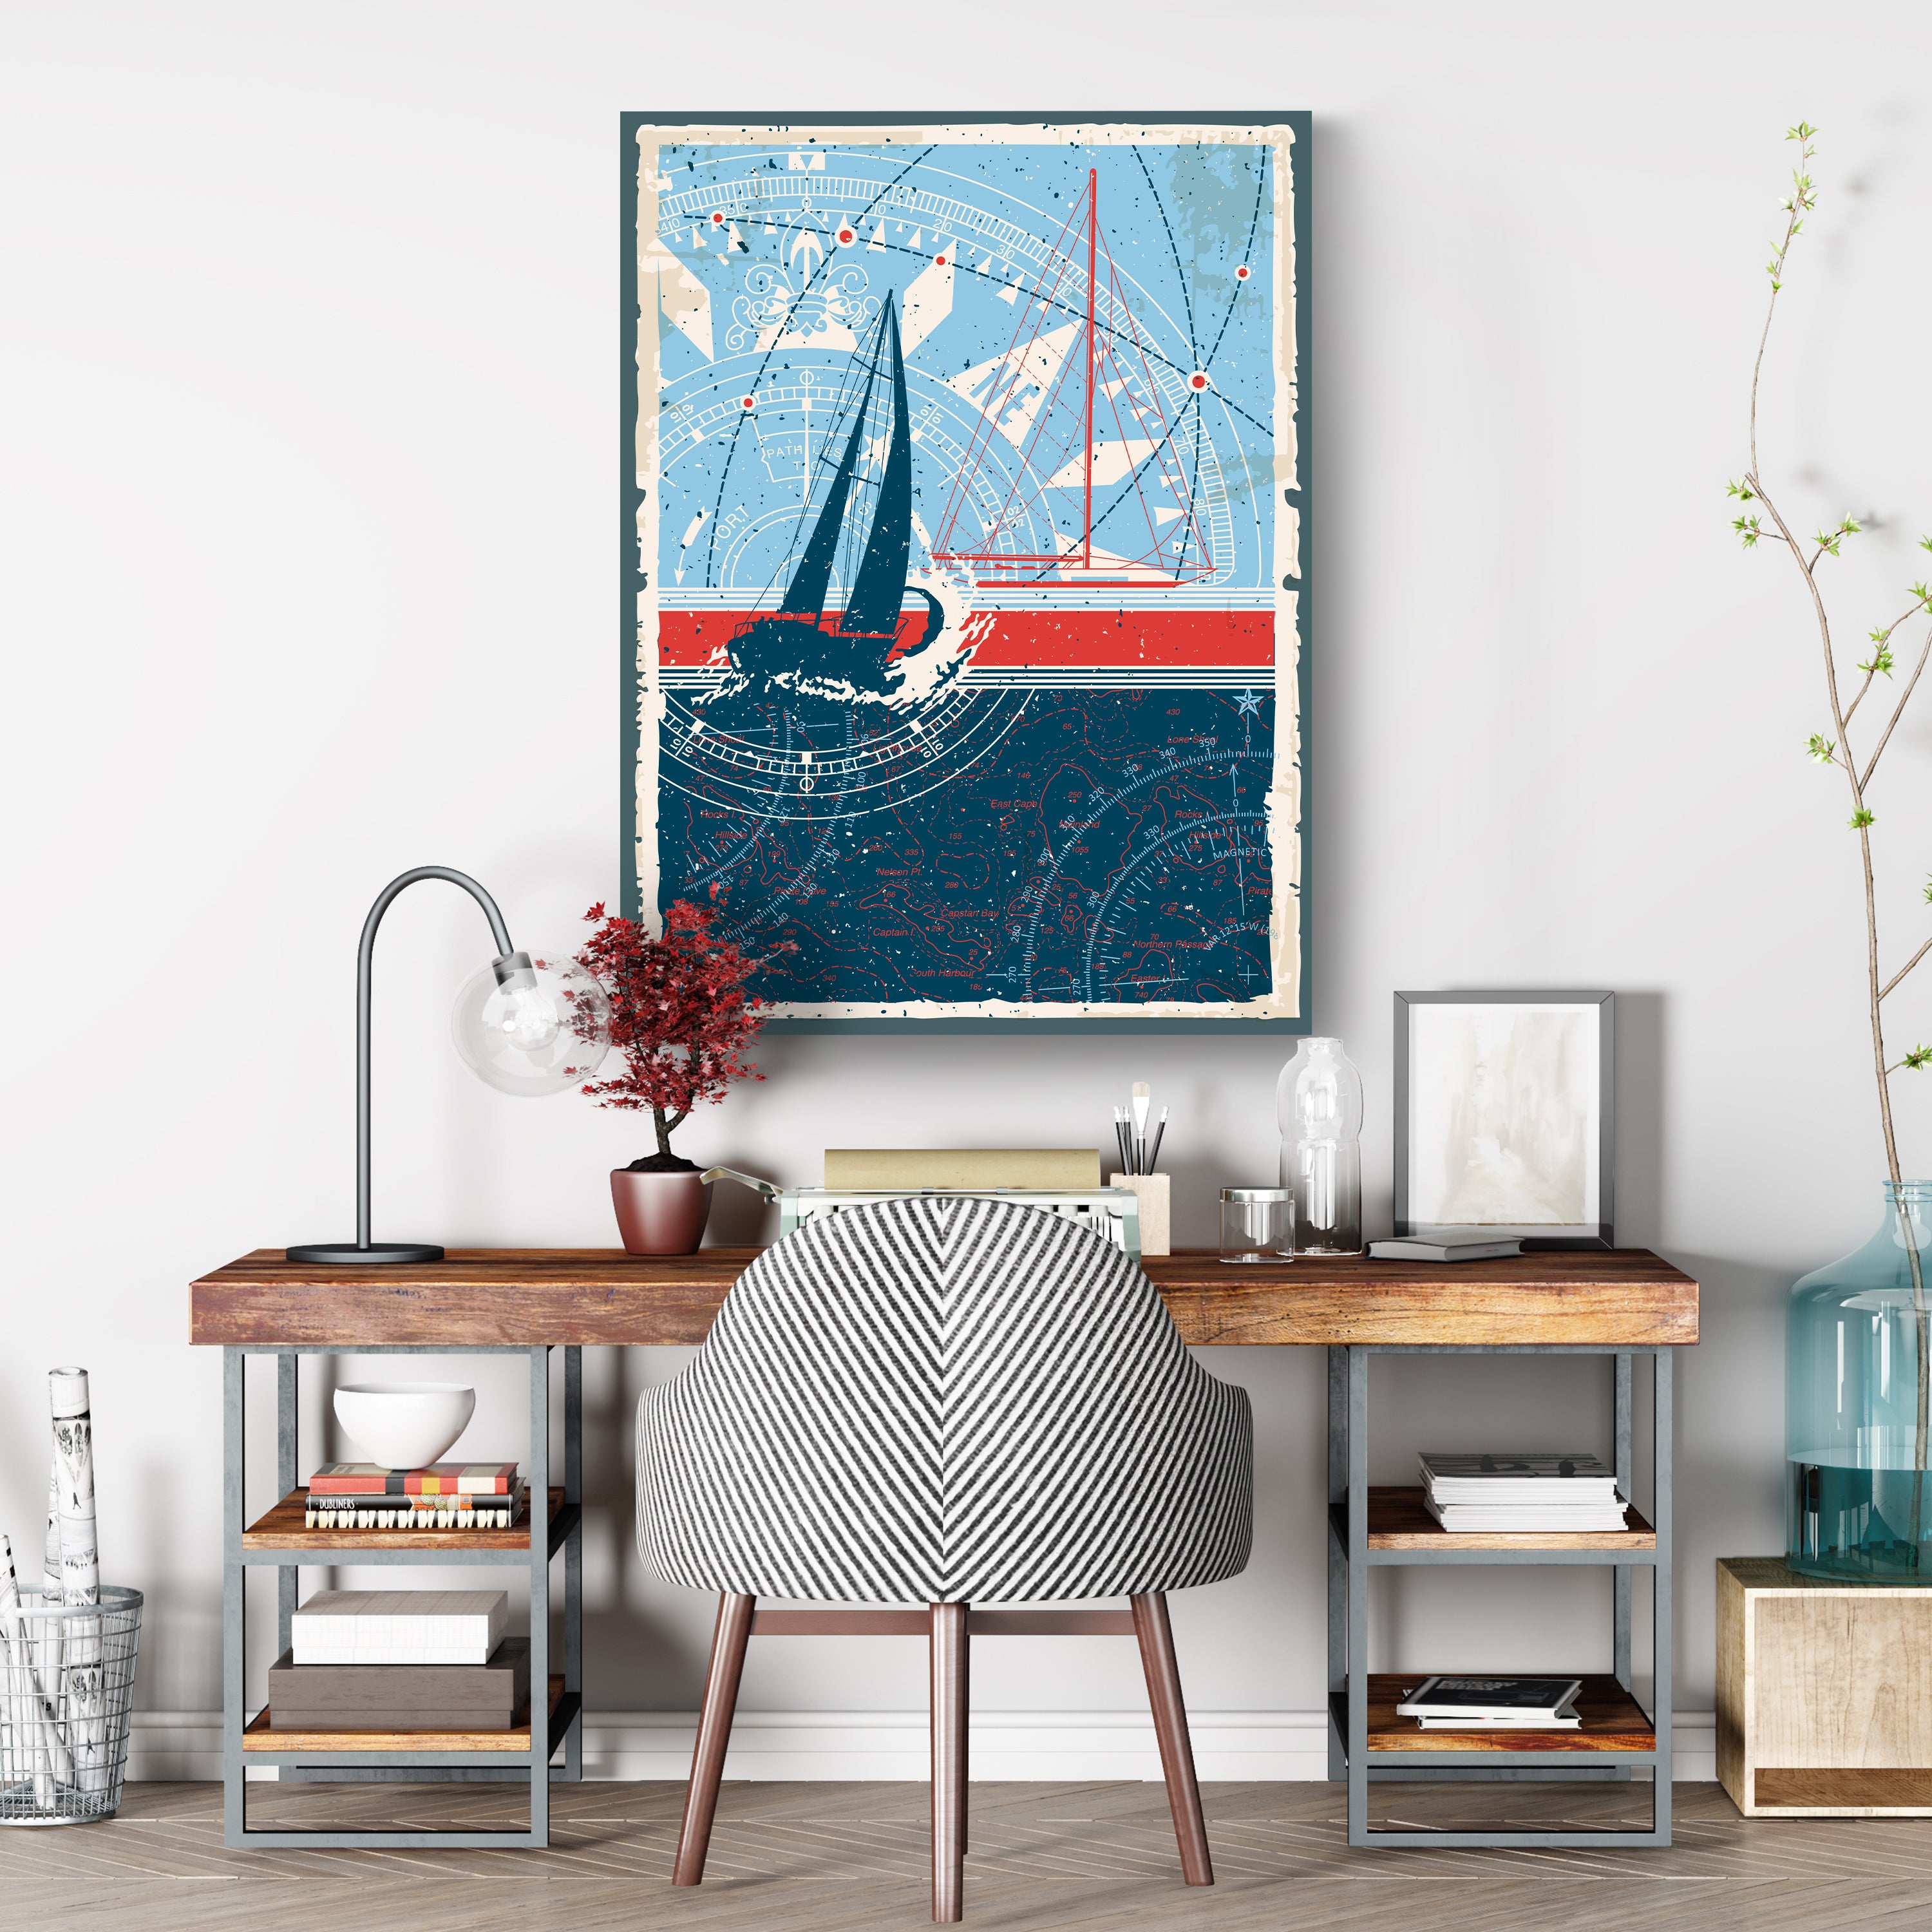 Leinwandbild Maritim, Segelschiff, Hochformat M0684 kaufen - Bild 3